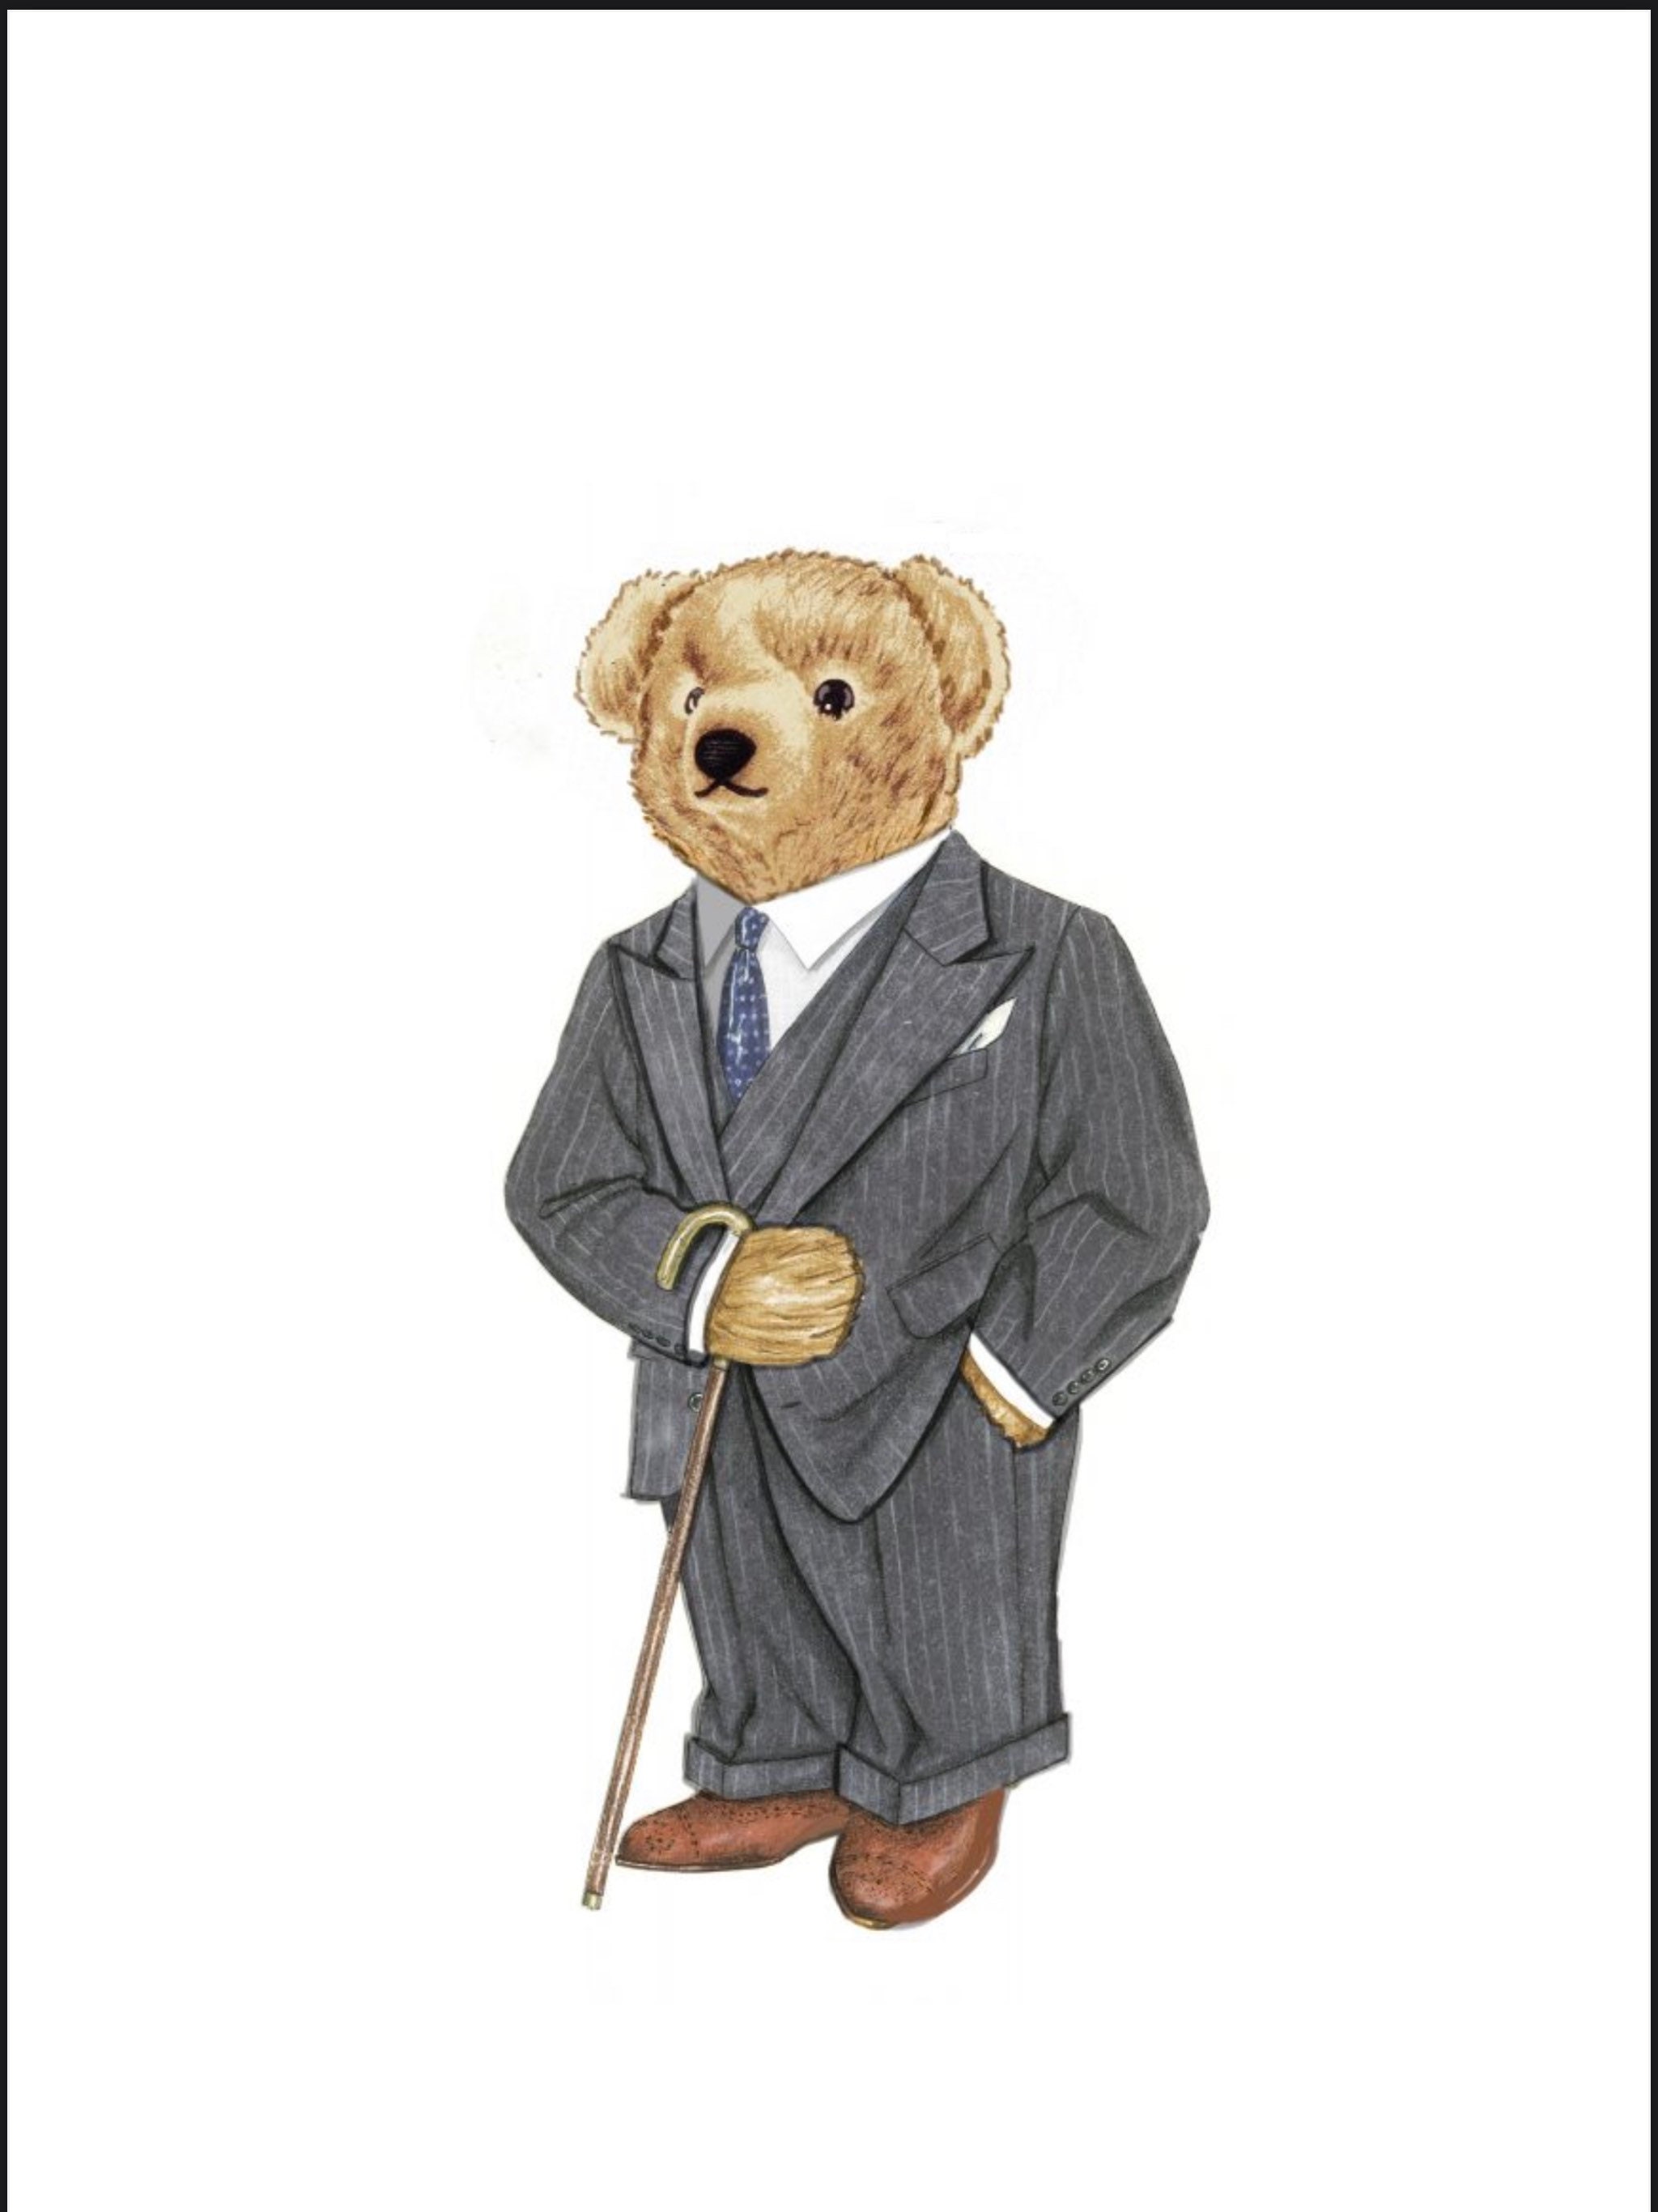 Ralph Lauren Polo Bear Plush Stuffed Animal Tuxedo Teddy 2022 New in Box